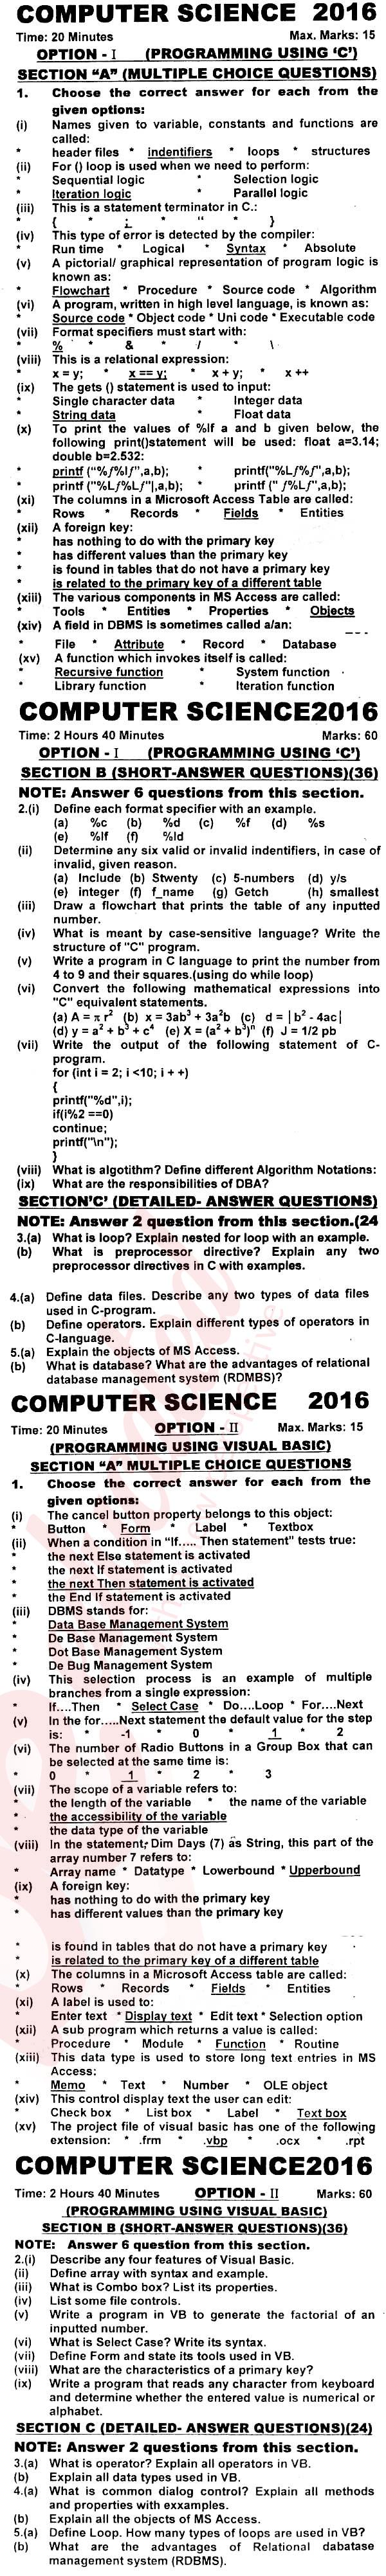 Computer Science ICS Part 2 Past Paper Group 1 KPBTE 2016